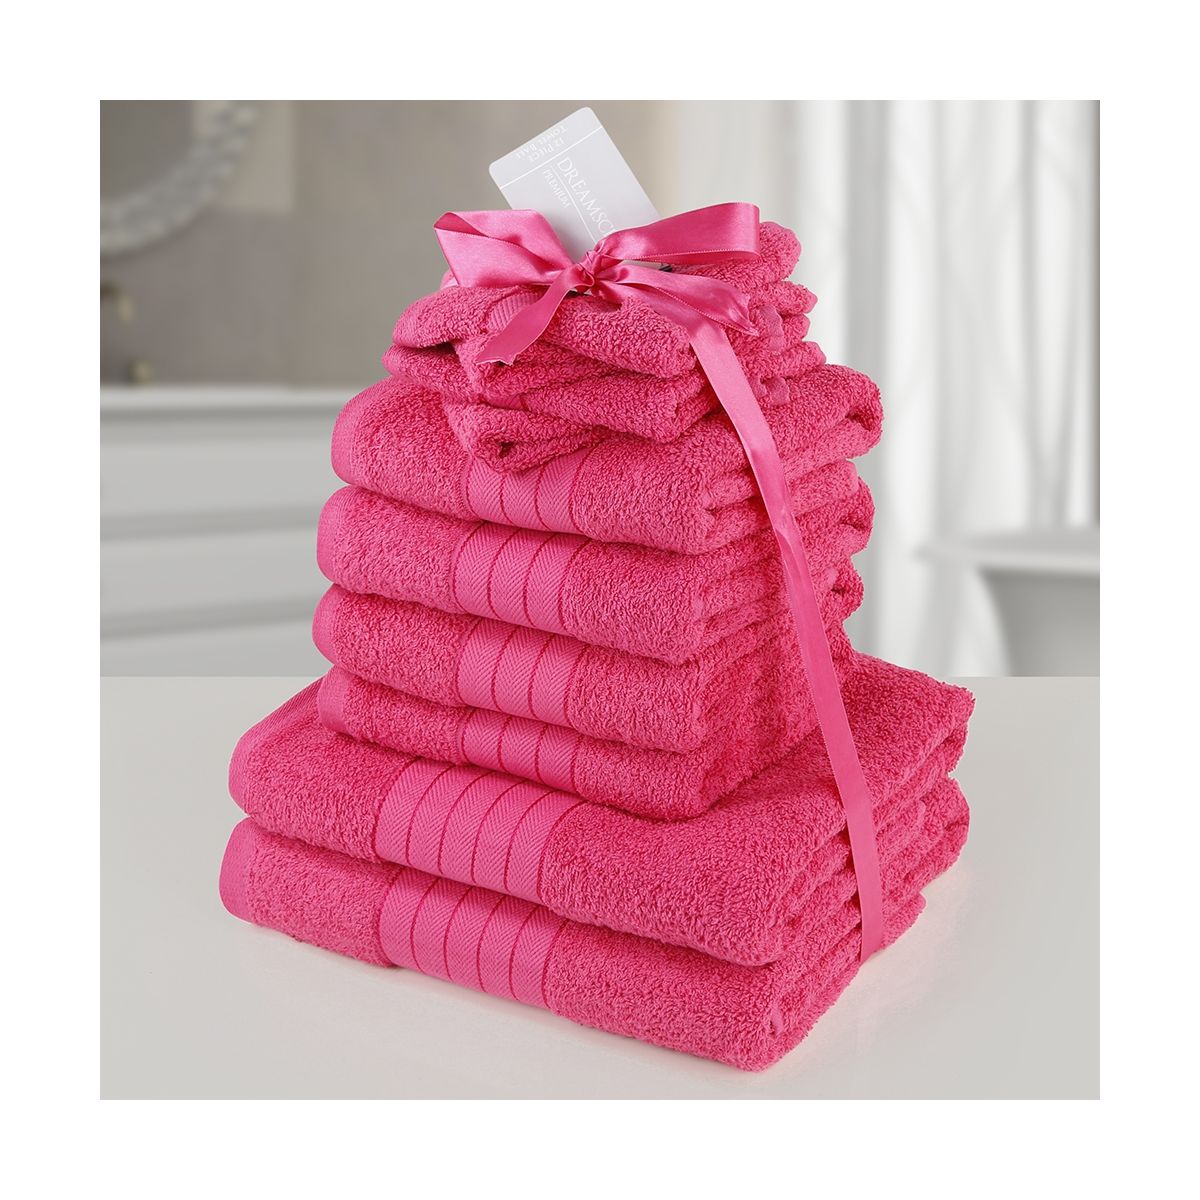 Dreamscene Towel Bale 10 Piece - Pink